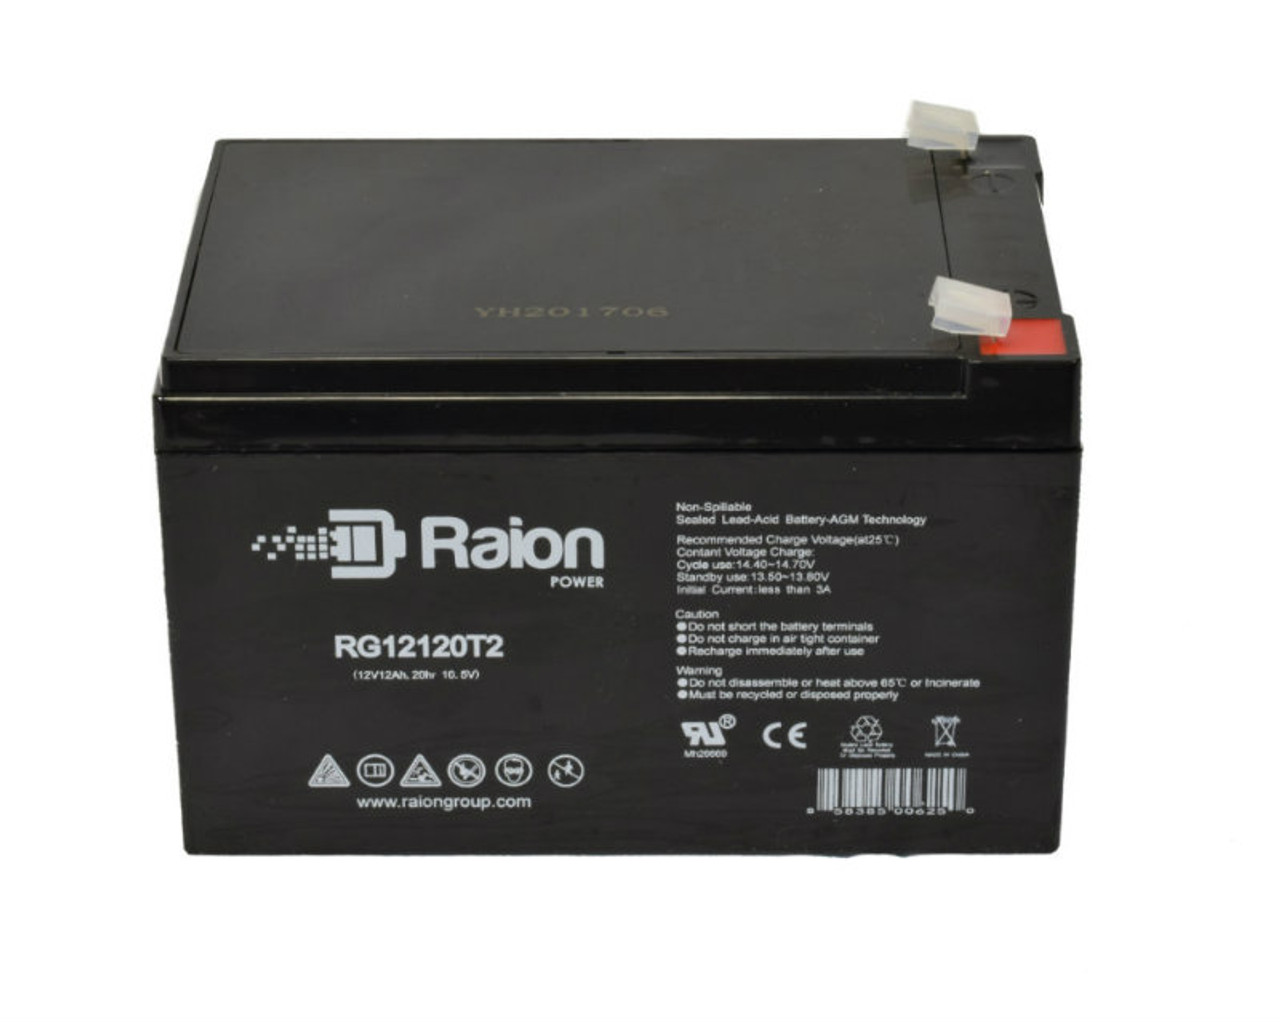 Raion Power RG12120T2 SLA Battery for National Power GT050R4